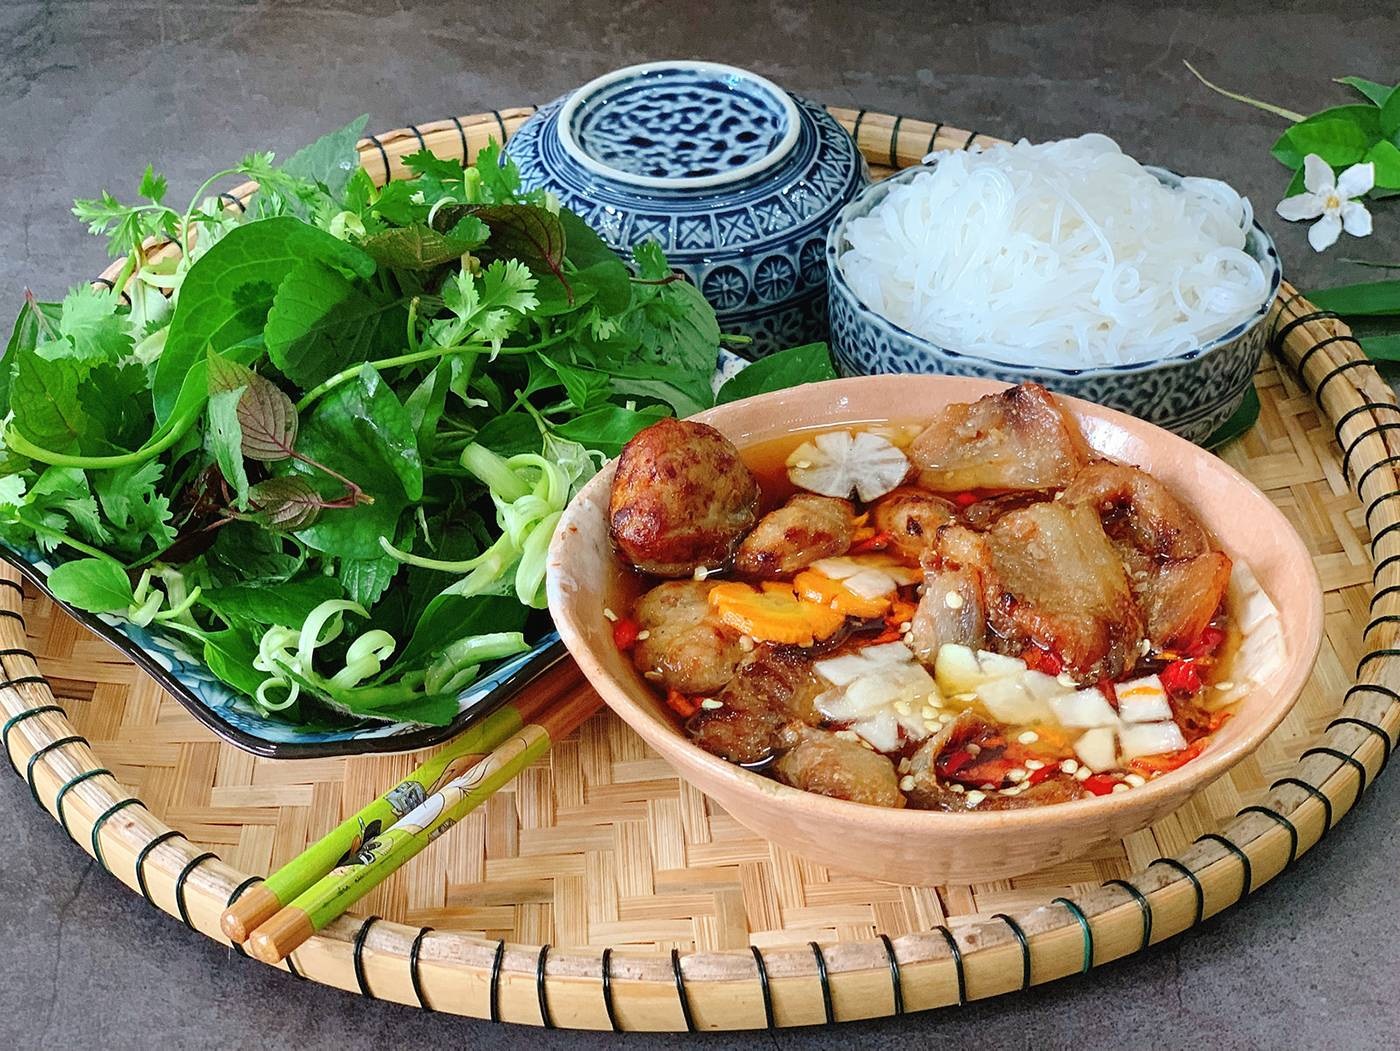 Bun Cha Hanoi - BBQ Pork Noodle with dipped source - Cooking tour hanoi